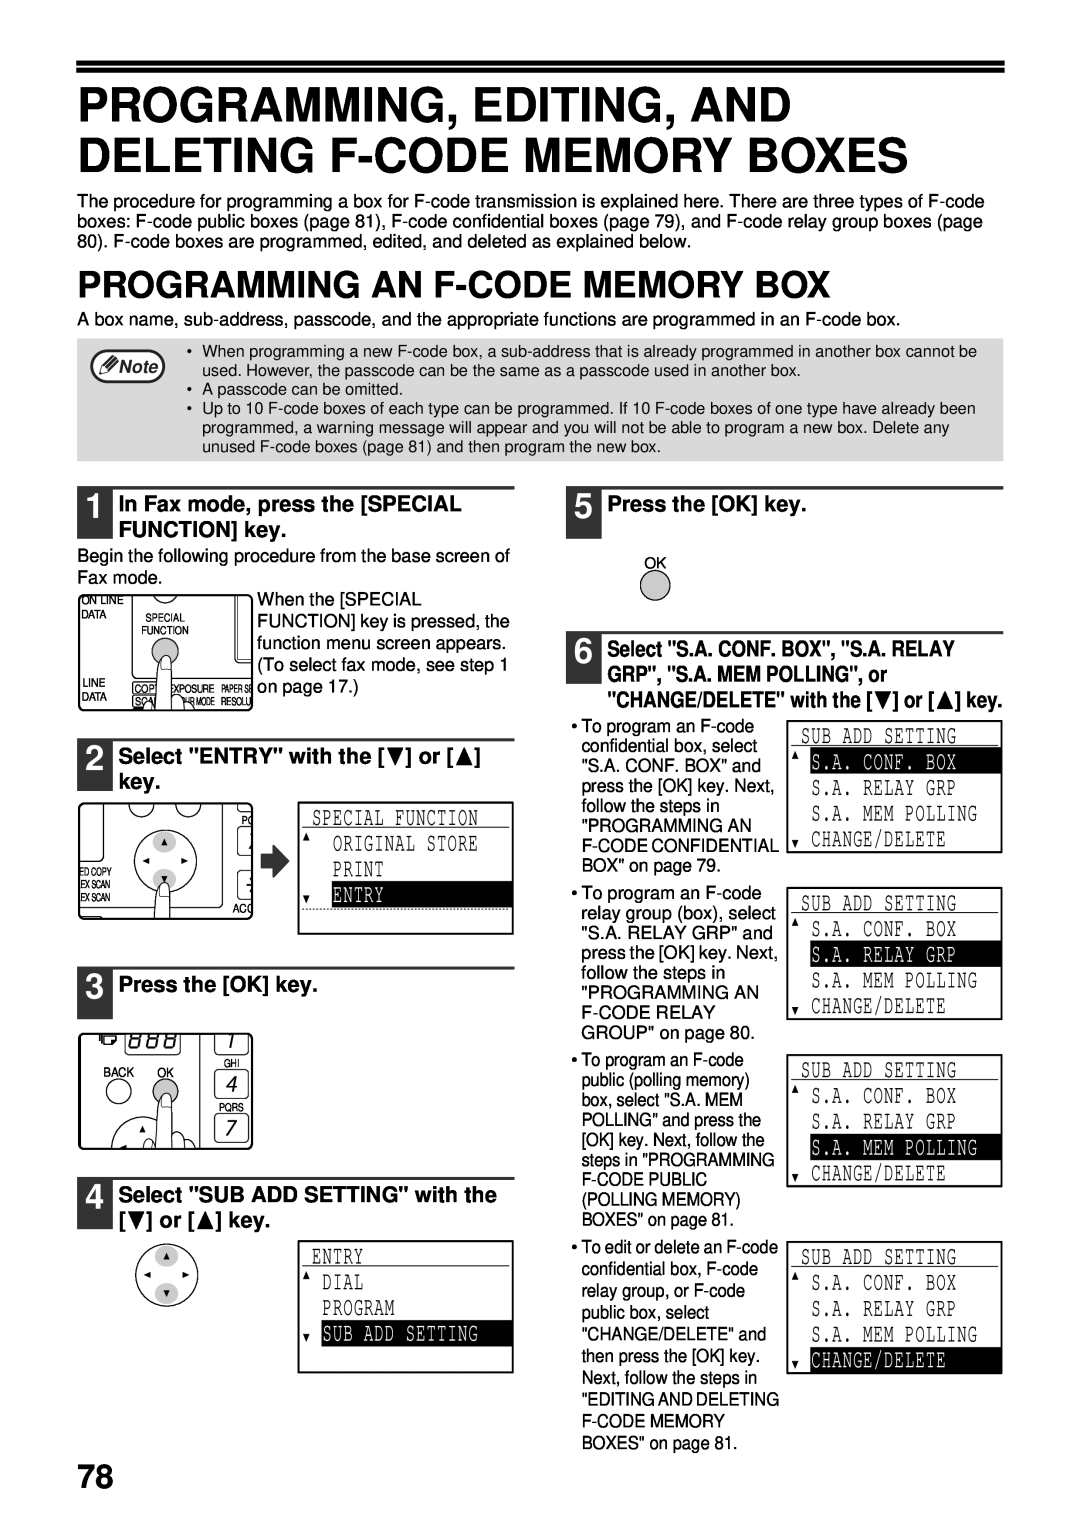 Sharp MX-FX13 Programming, Editing, And Deleting F-Code Memory Boxes, Programming An F-Code Memory Box, Sub Add Setting 